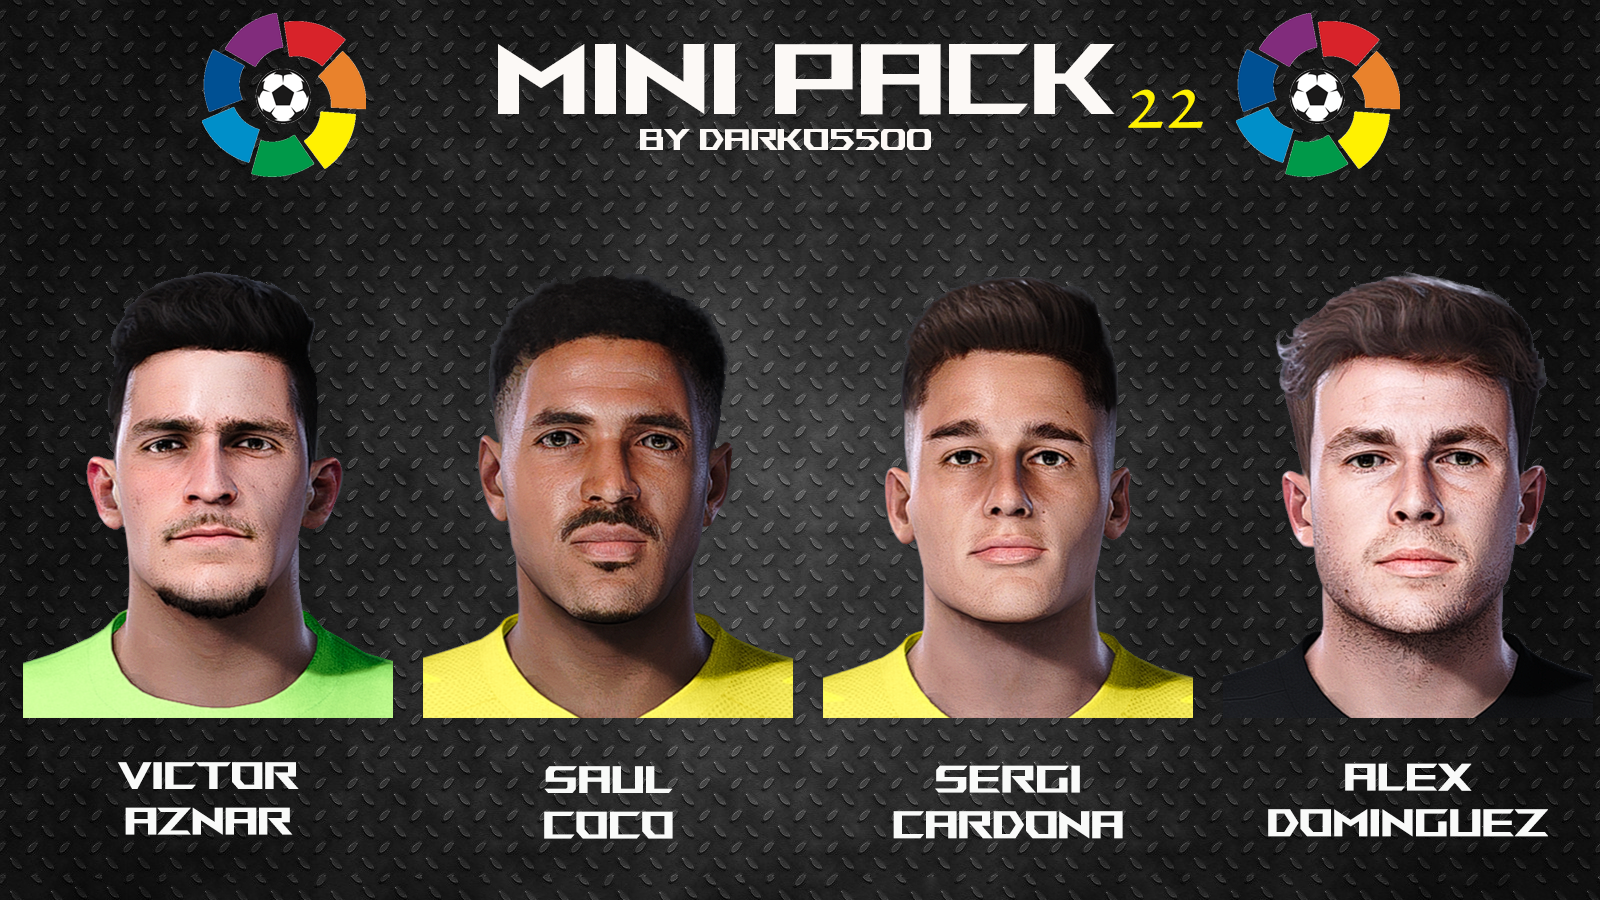 PES 2021 Faces: LaLiga Minipack 22 by Darko5500